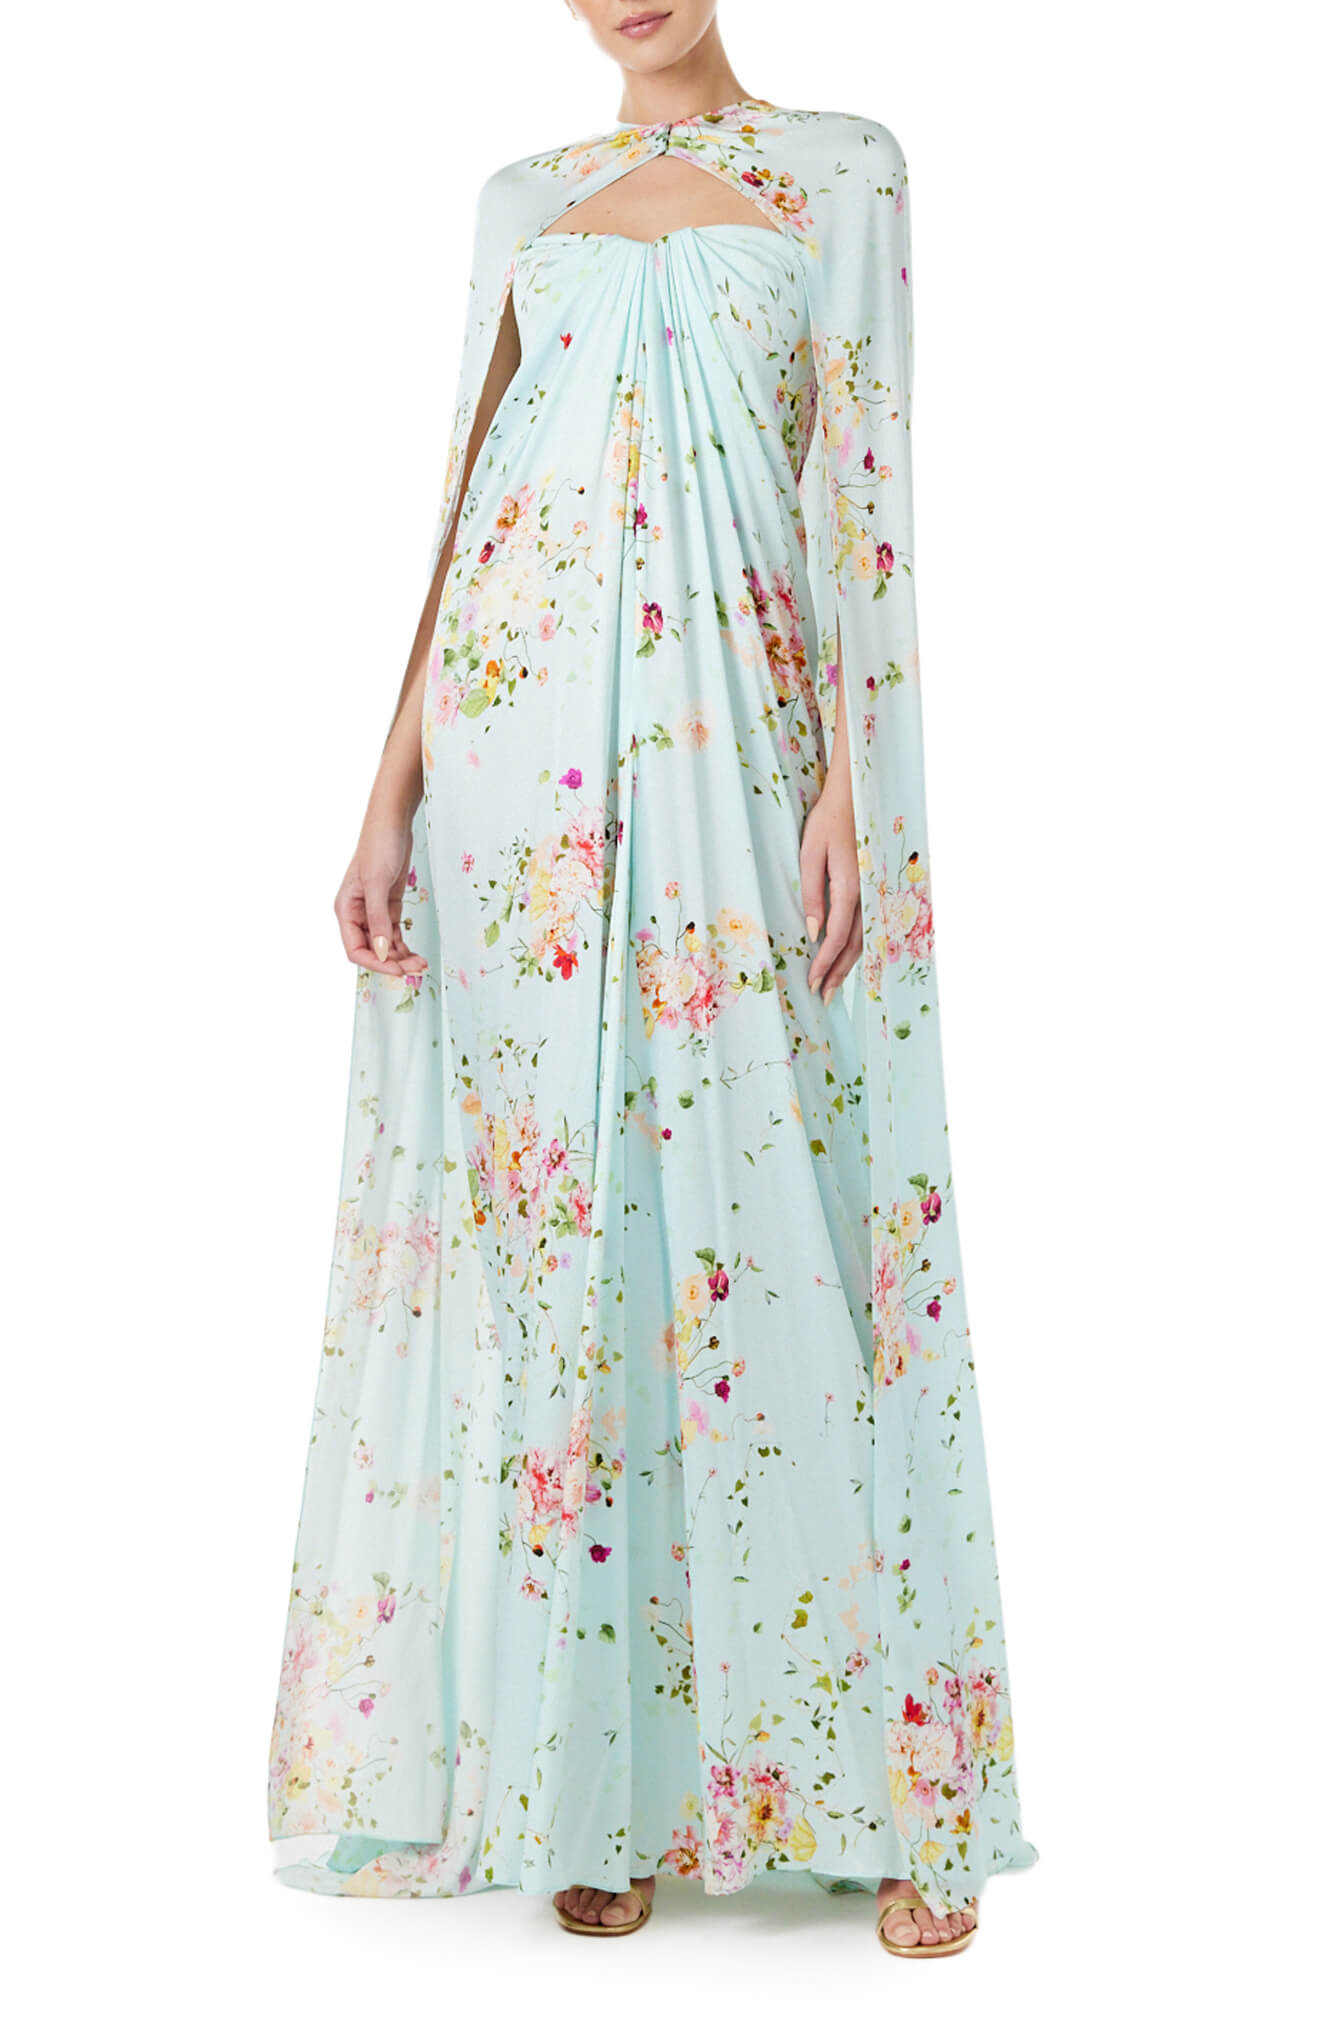 Monique Lhuillier strapless draped gown in pistachio floral print fabric.